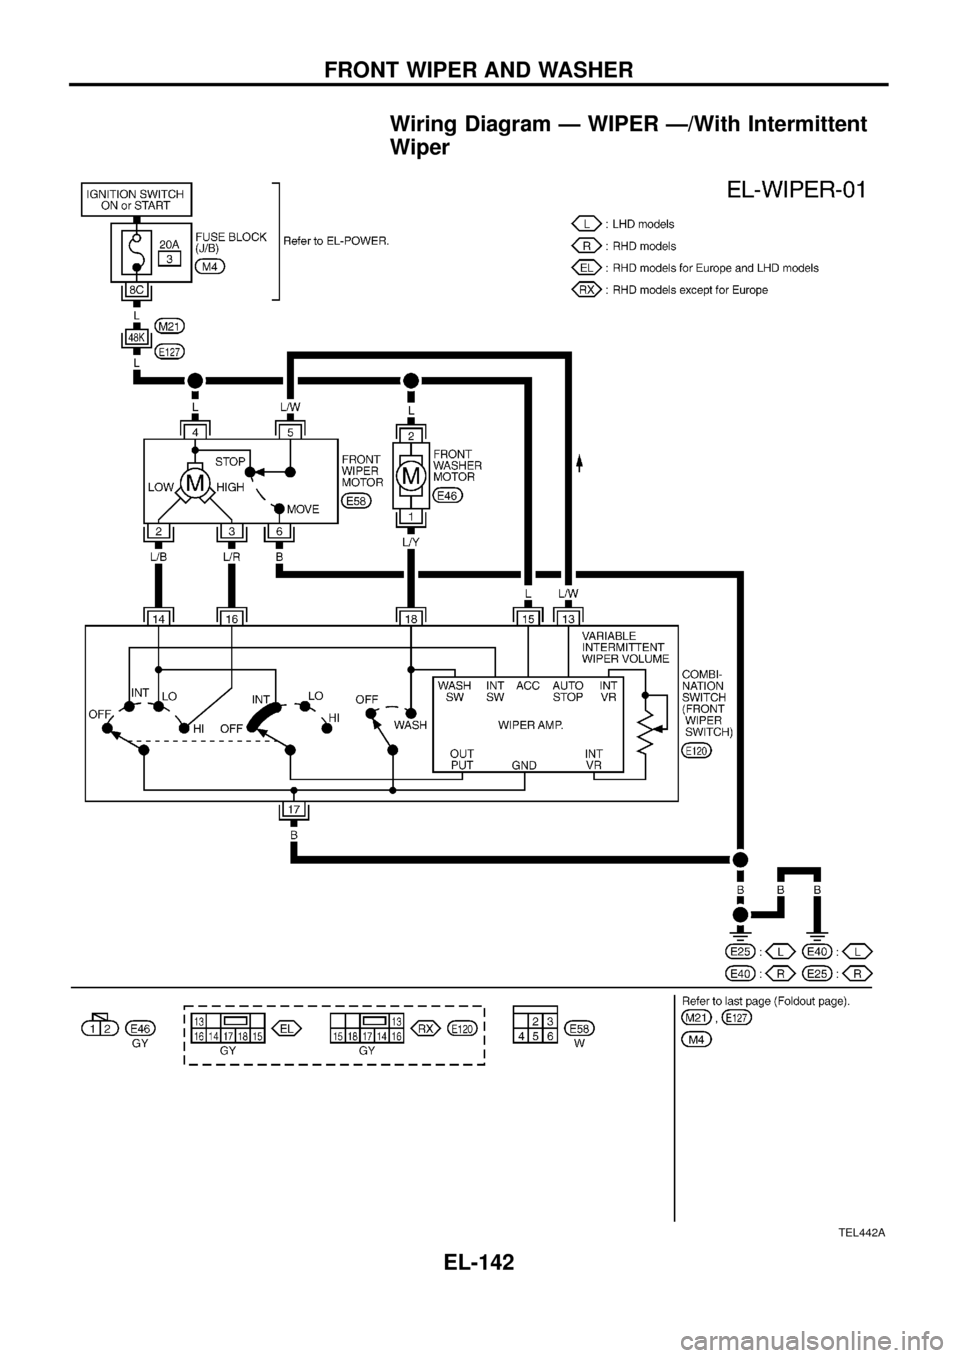 NISSAN PATROL 1998 Y61 / 5.G Electrical System Workshop Manual Wiring Diagram Ð WIPER Ð/With Intermittent
Wiper
TEL442A
FRONT WIPER AND WASHER
EL-142 